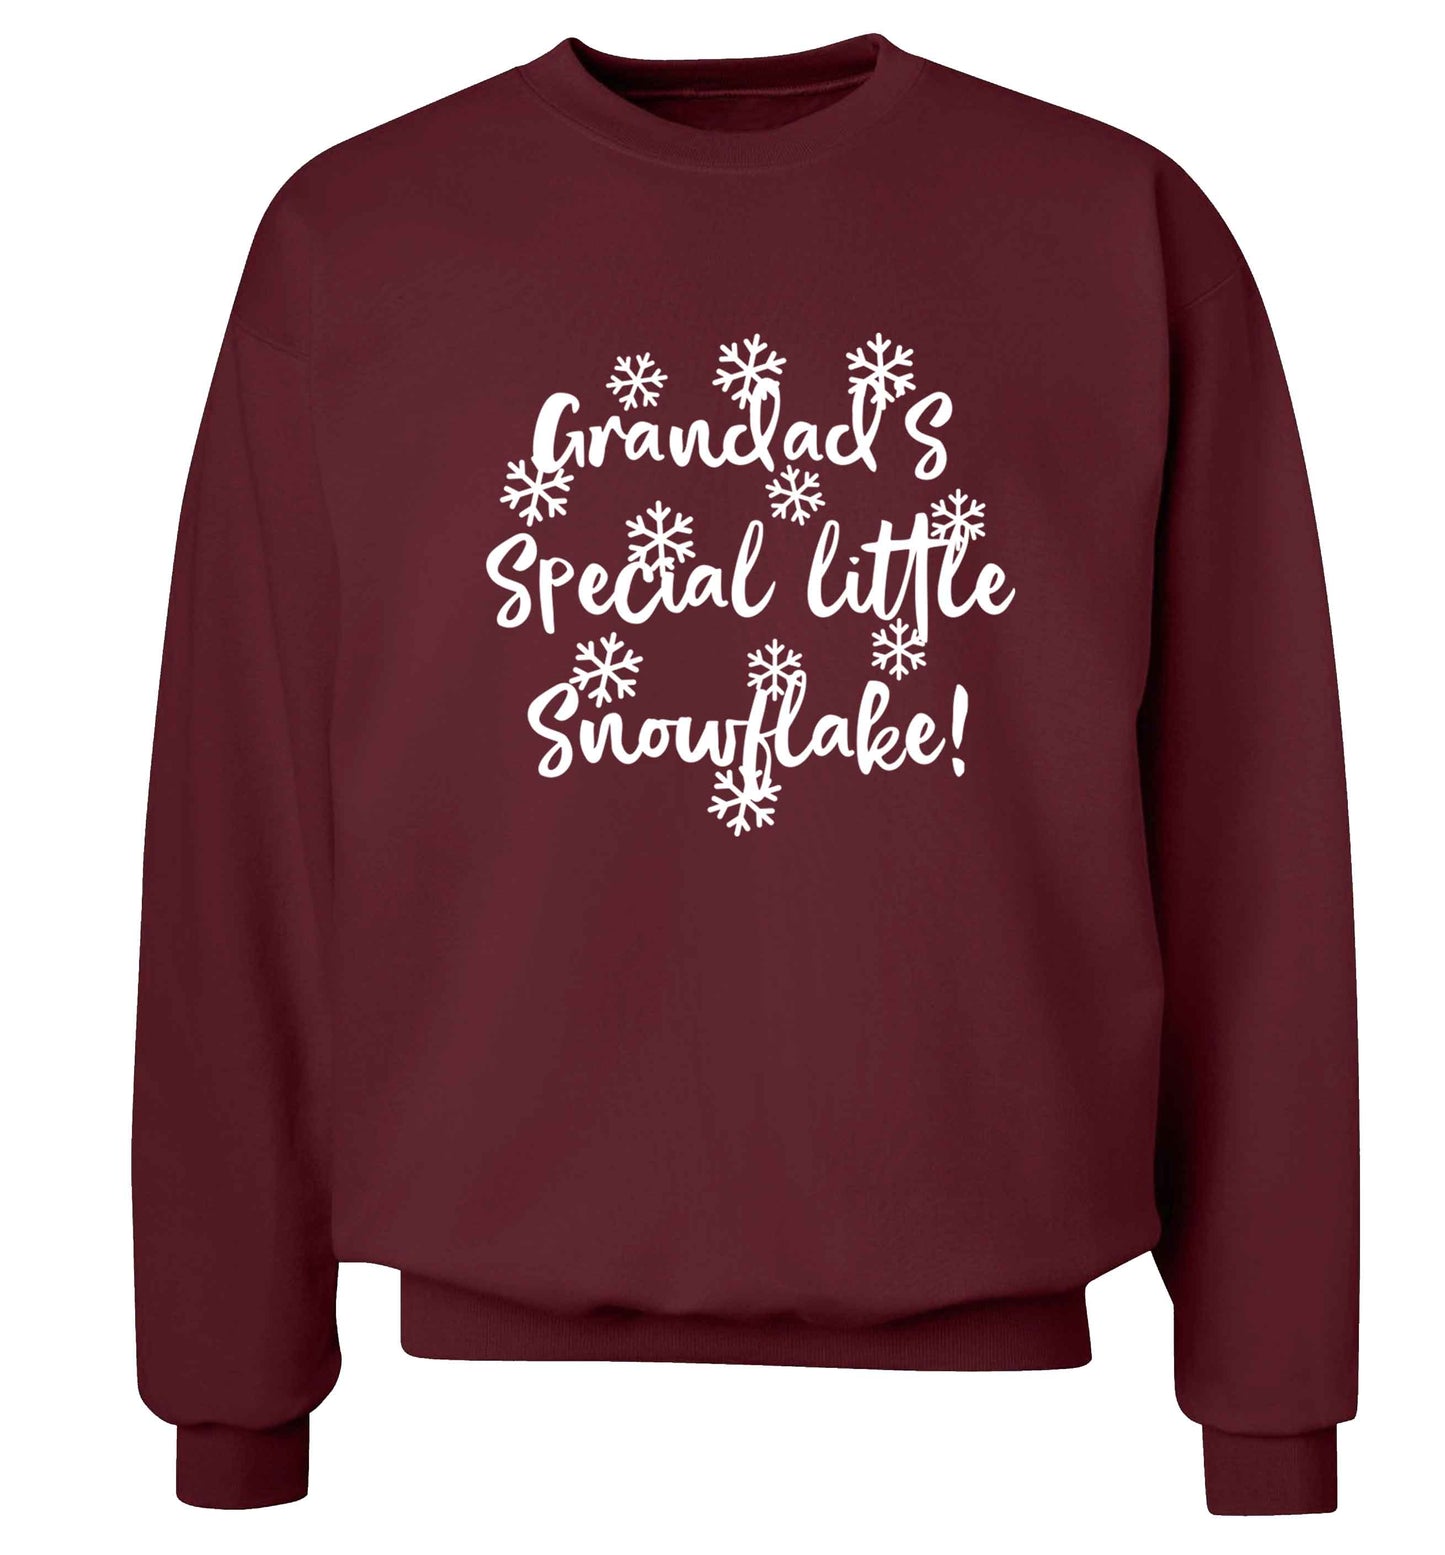 Grandad's special little snowflake Adult's unisex maroon Sweater 2XL